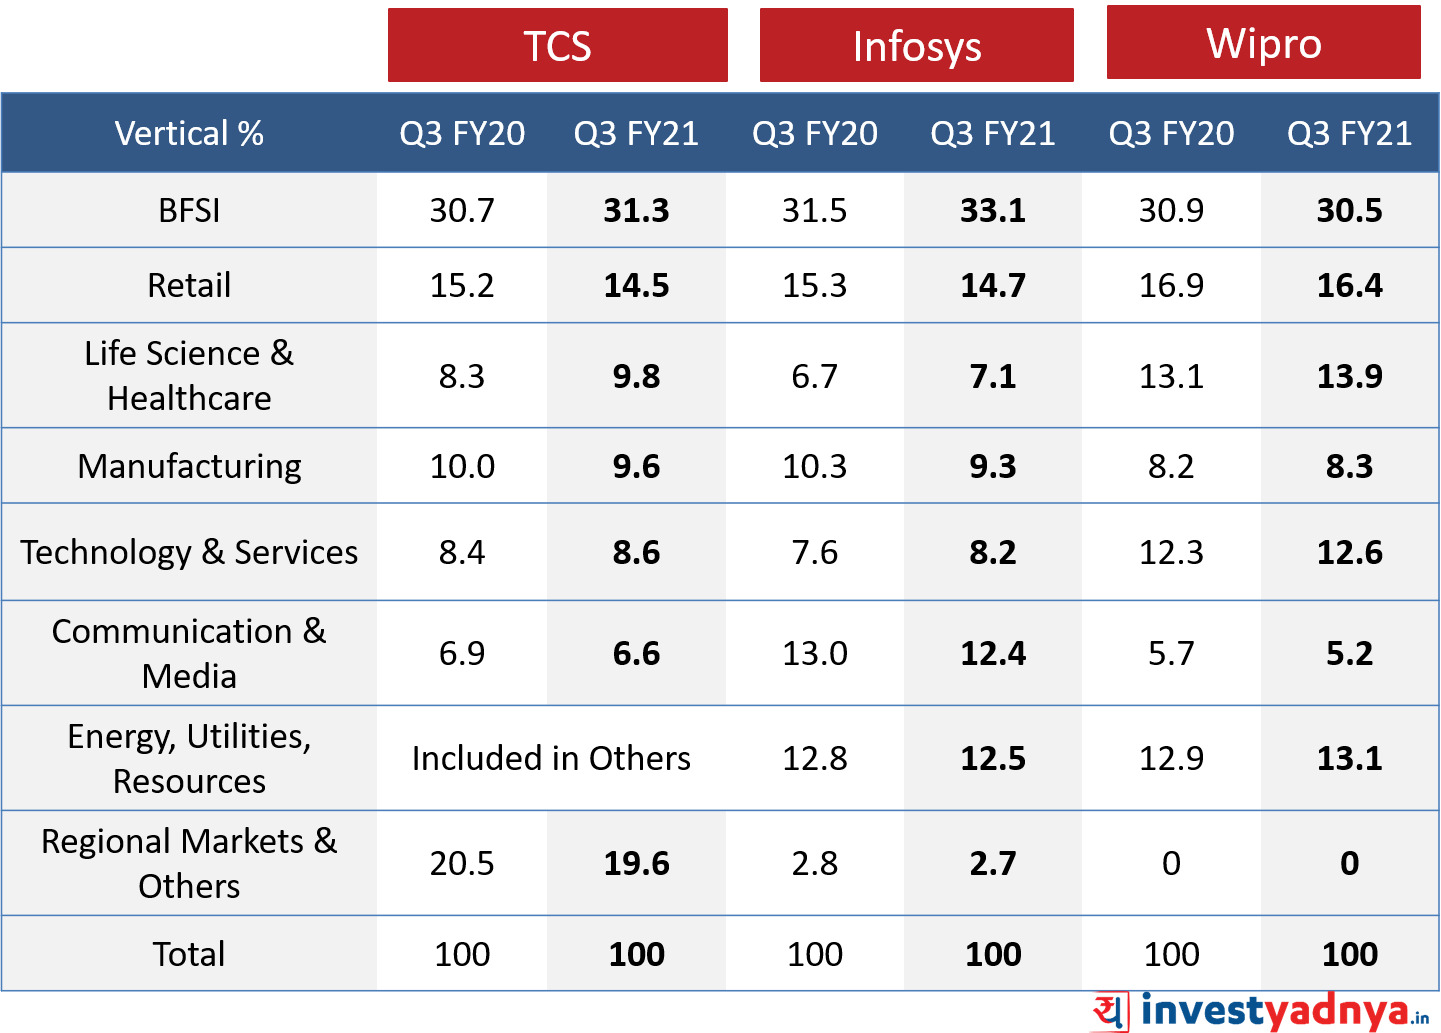 TCS vs Infosys vs Wipro Segment revenue mix